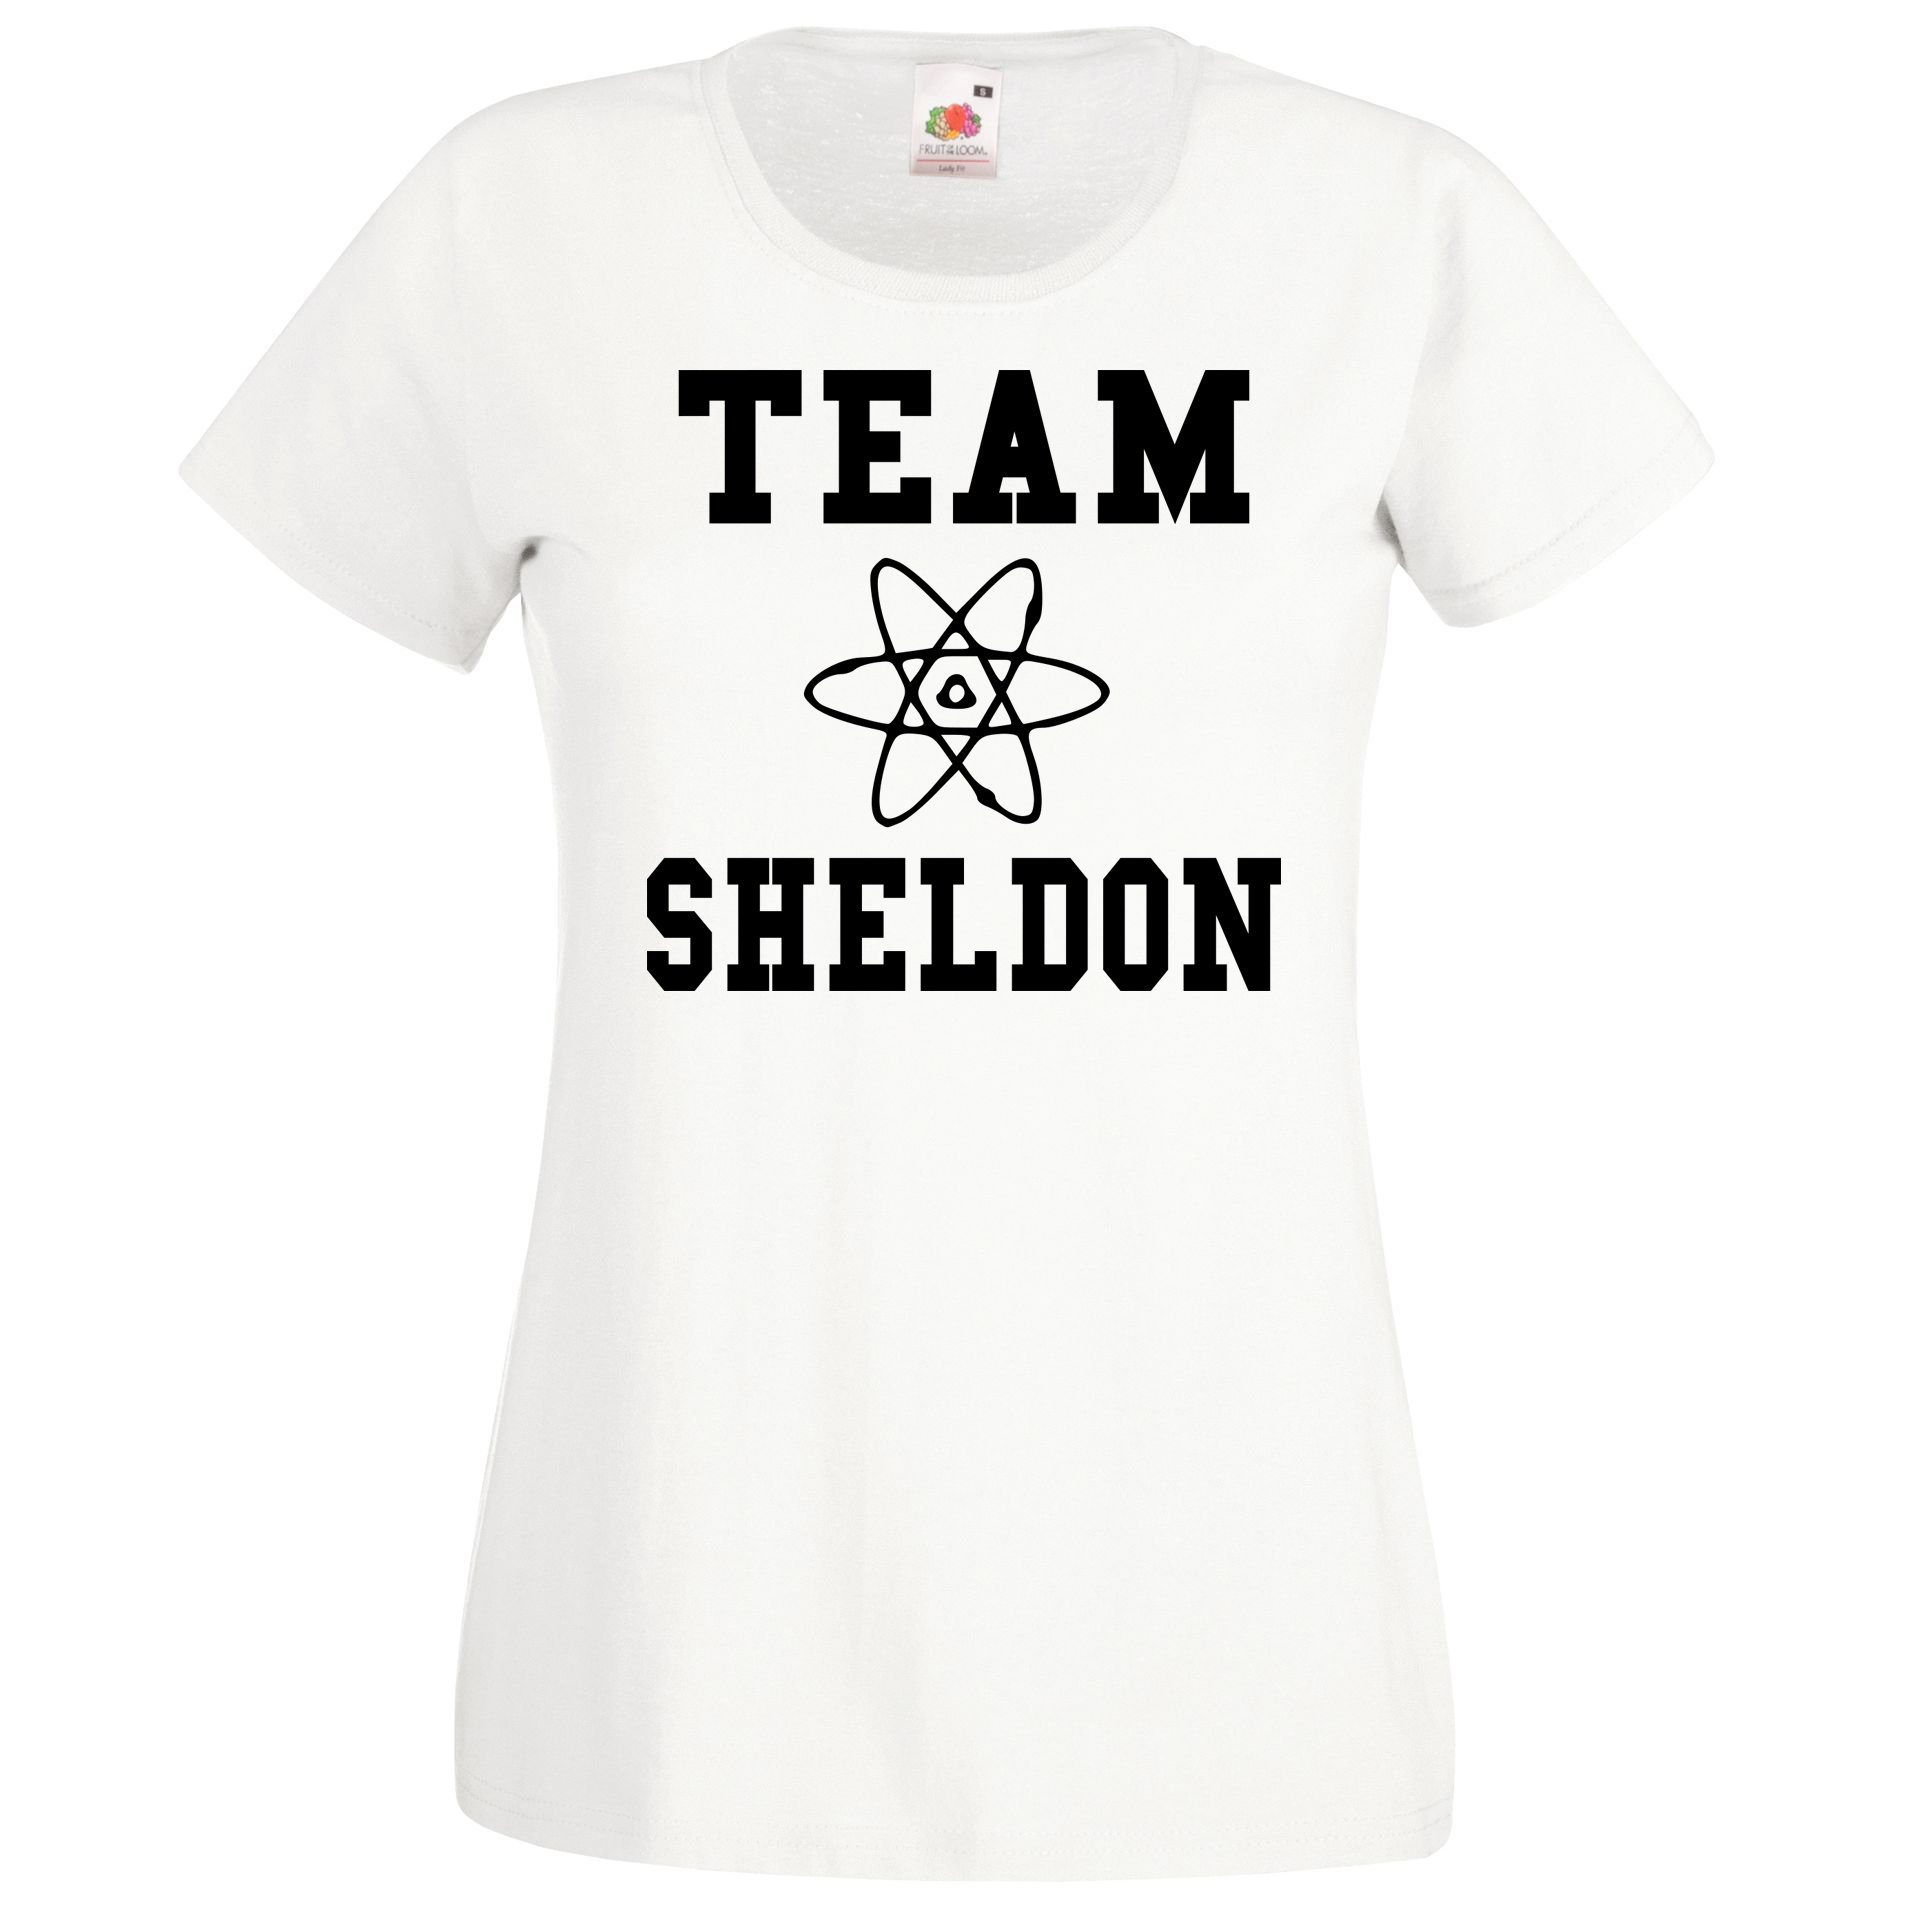 Youth Designz T-Shirt Team mit Sheldon T-Shirt Damen Motiv Weiß trendigem